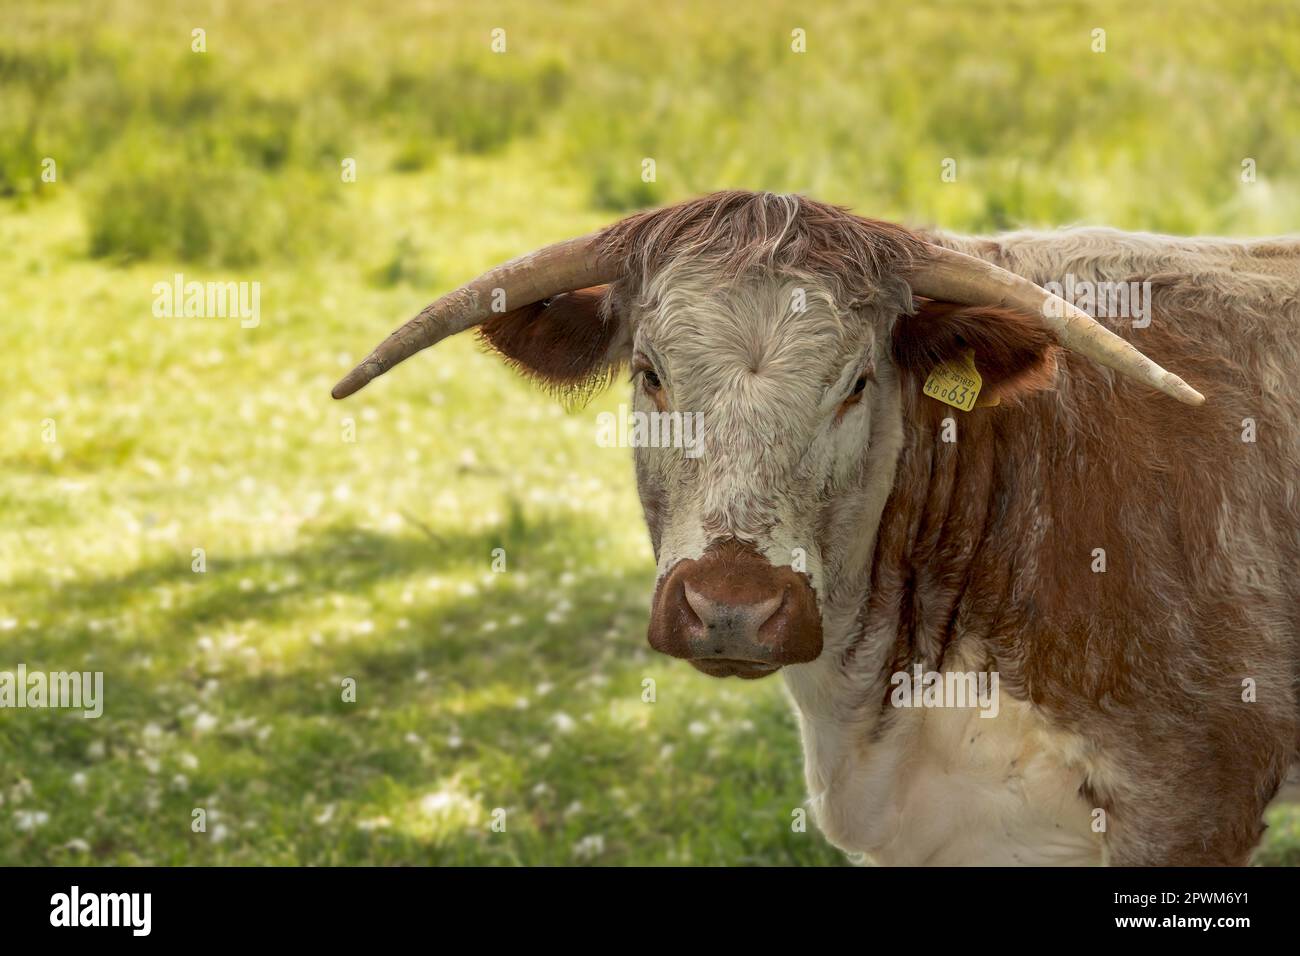 An Oxford Cow Stock Photo